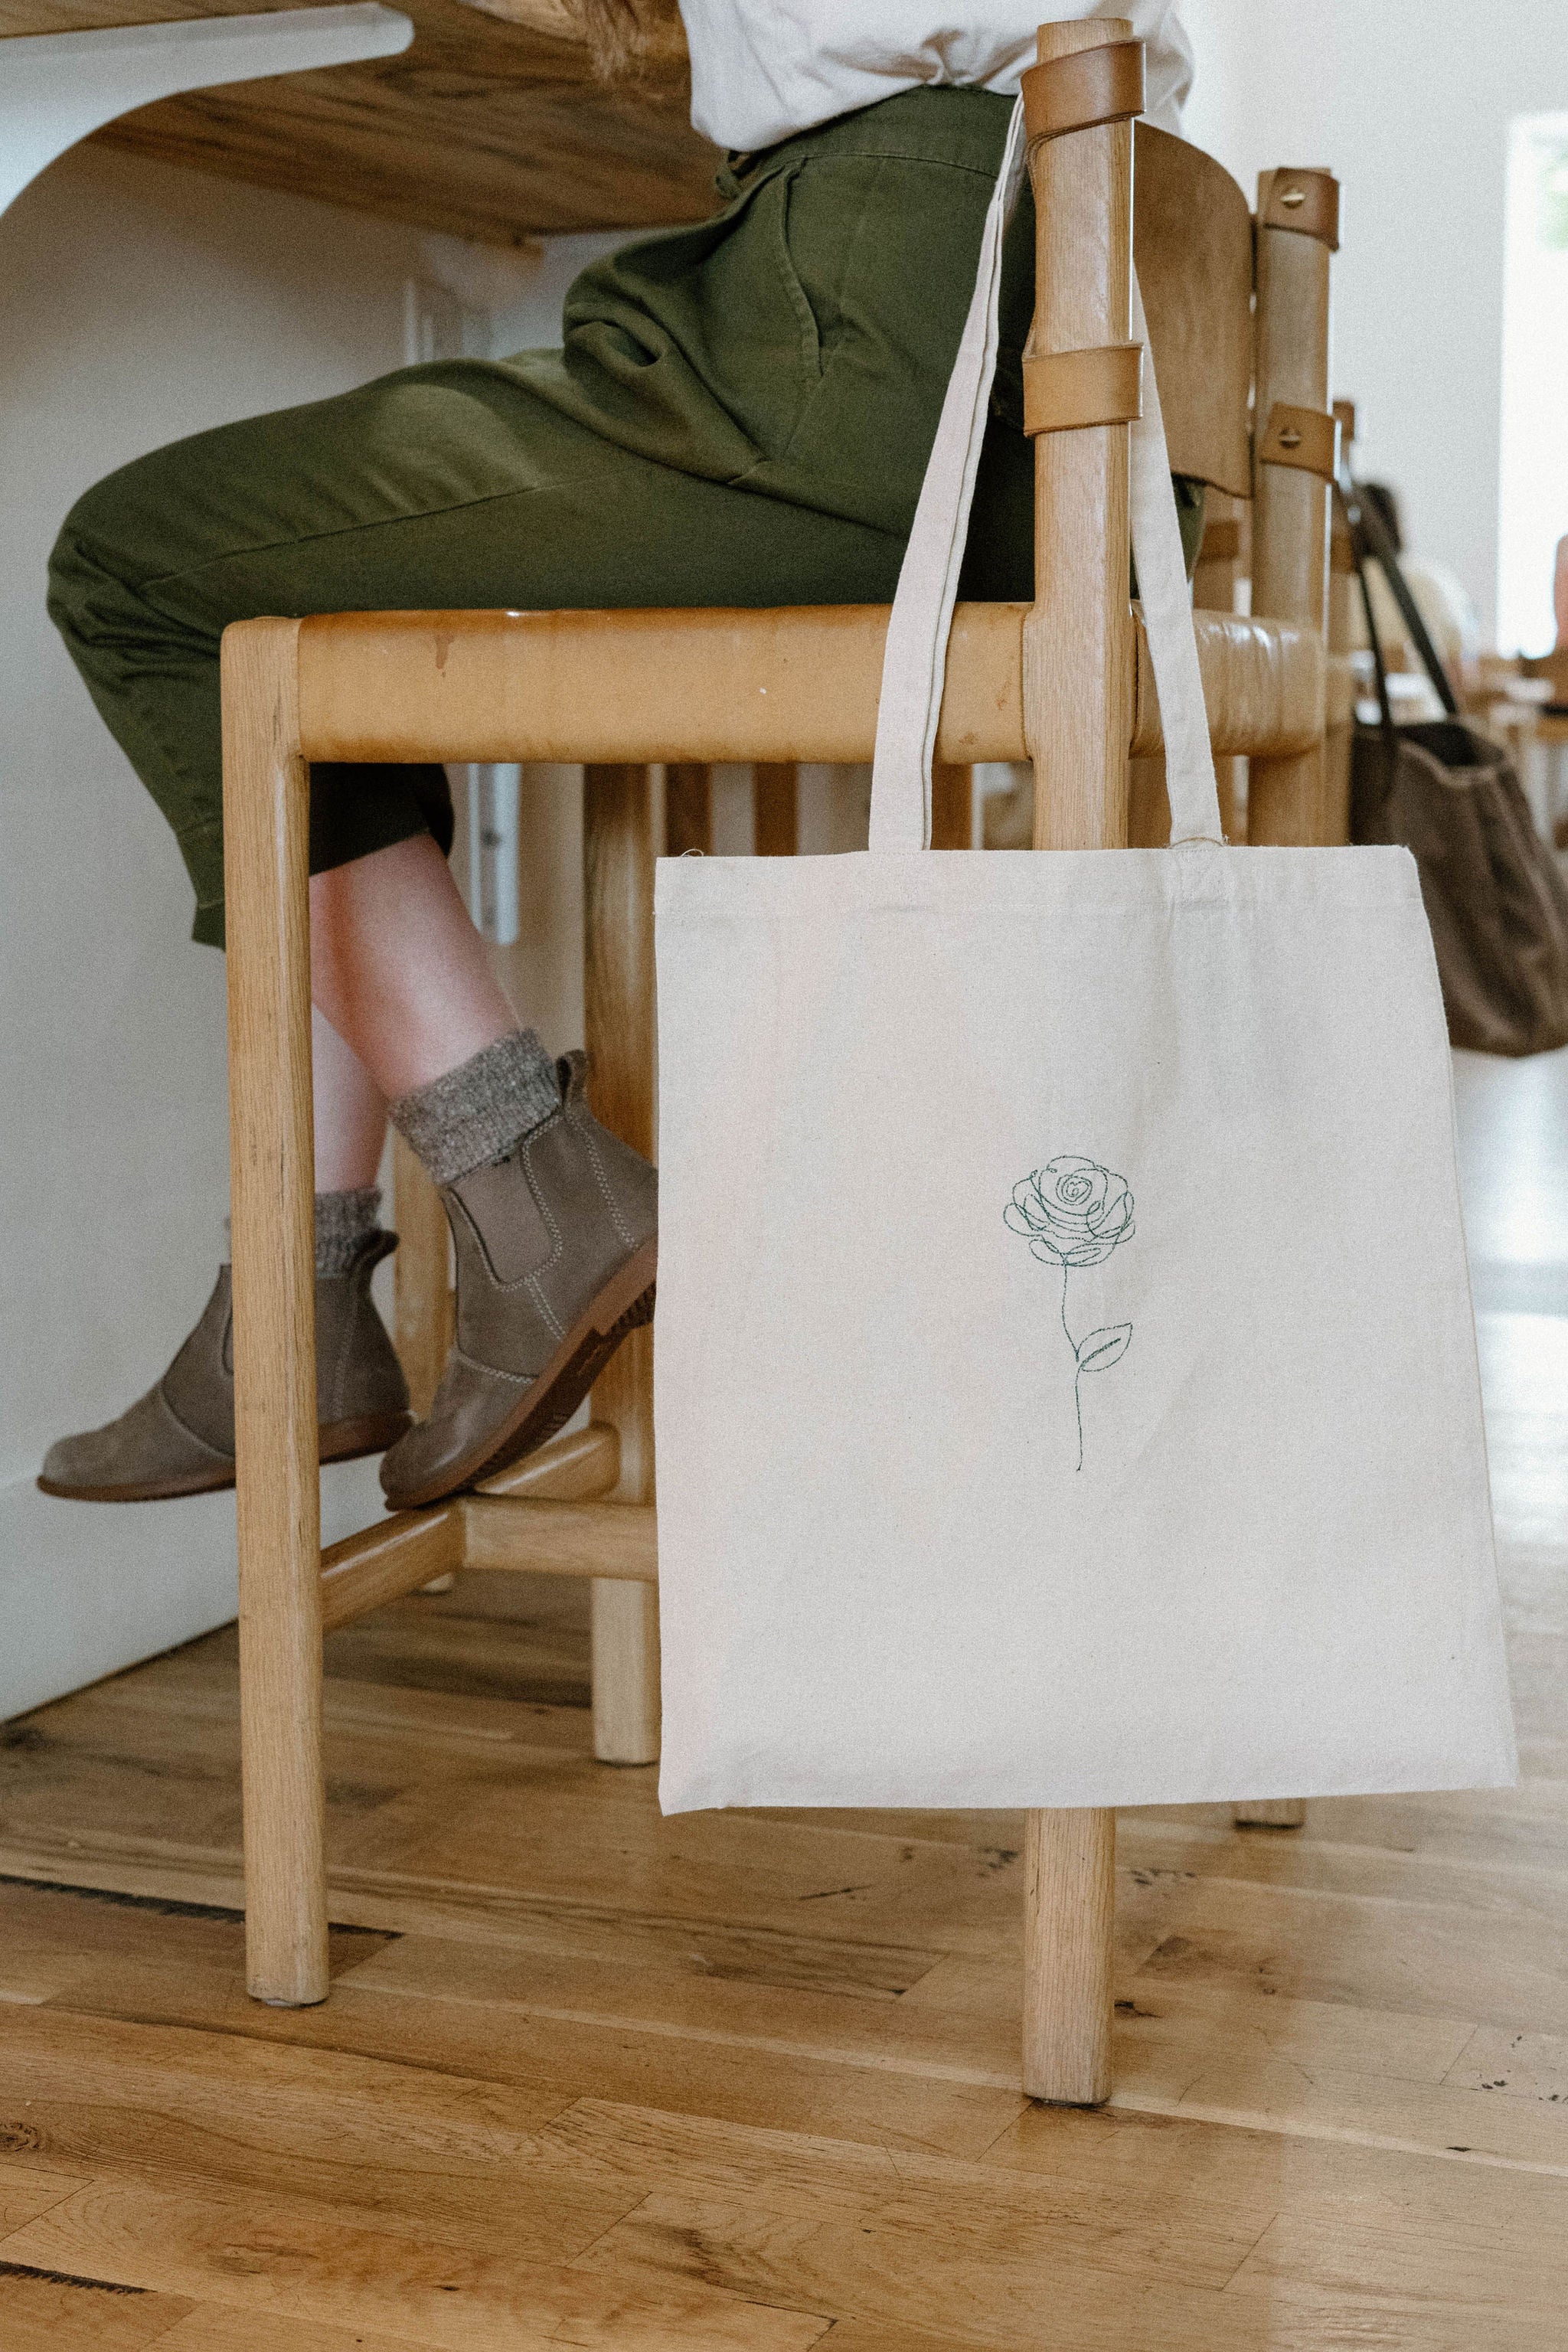 Simple Rose Tote Bag - Custom Color options